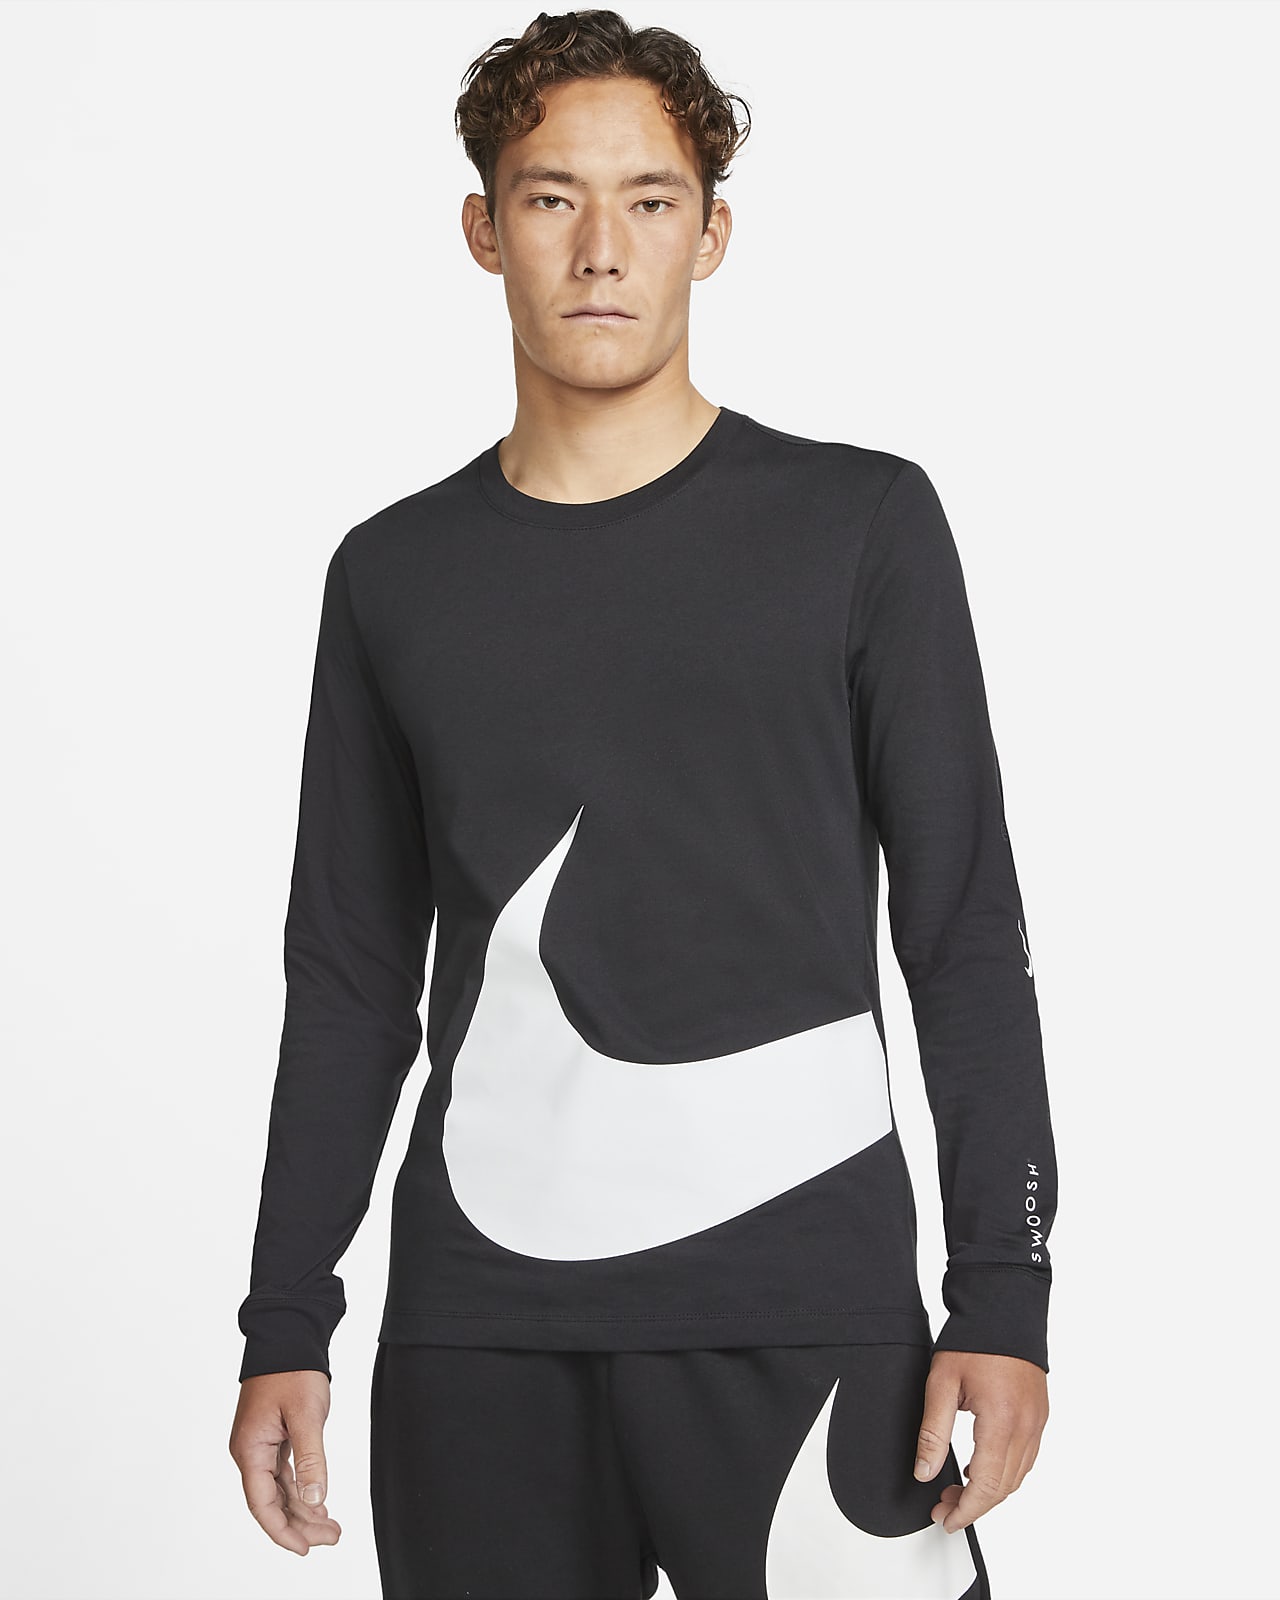 Nike公式 ナイキ スポーツウェア メンズ ロングスリーブ Tシャツ オンラインストア 通販サイト